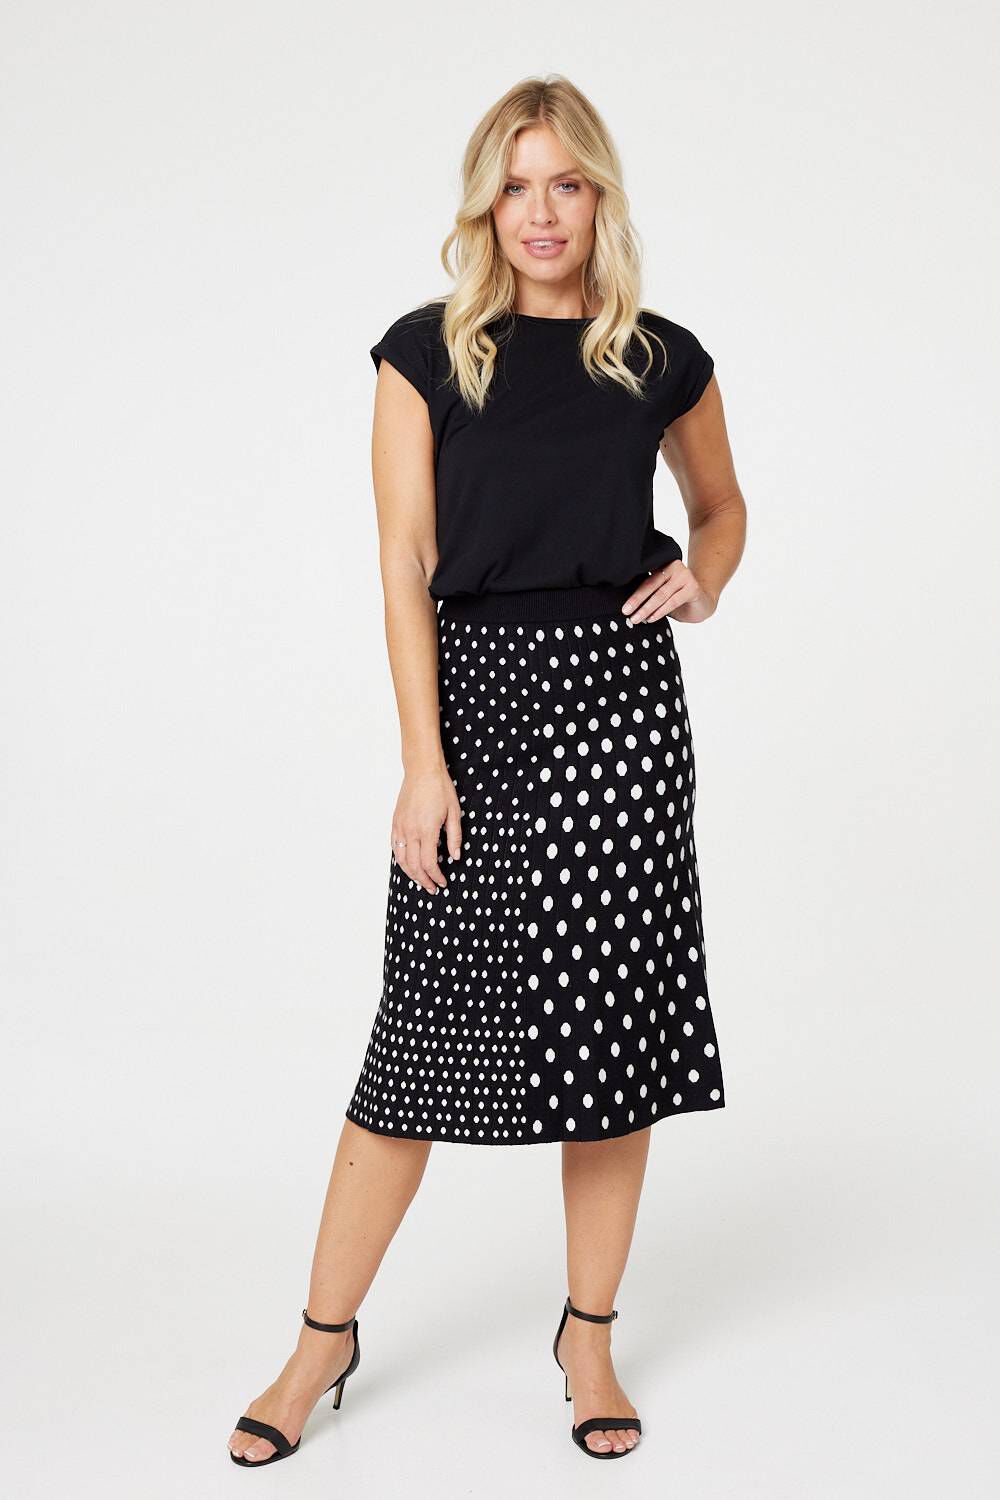 Izabel London Women’s Black and White Viscose Polka Dot A-Line Knitted Skirt, Size: 10